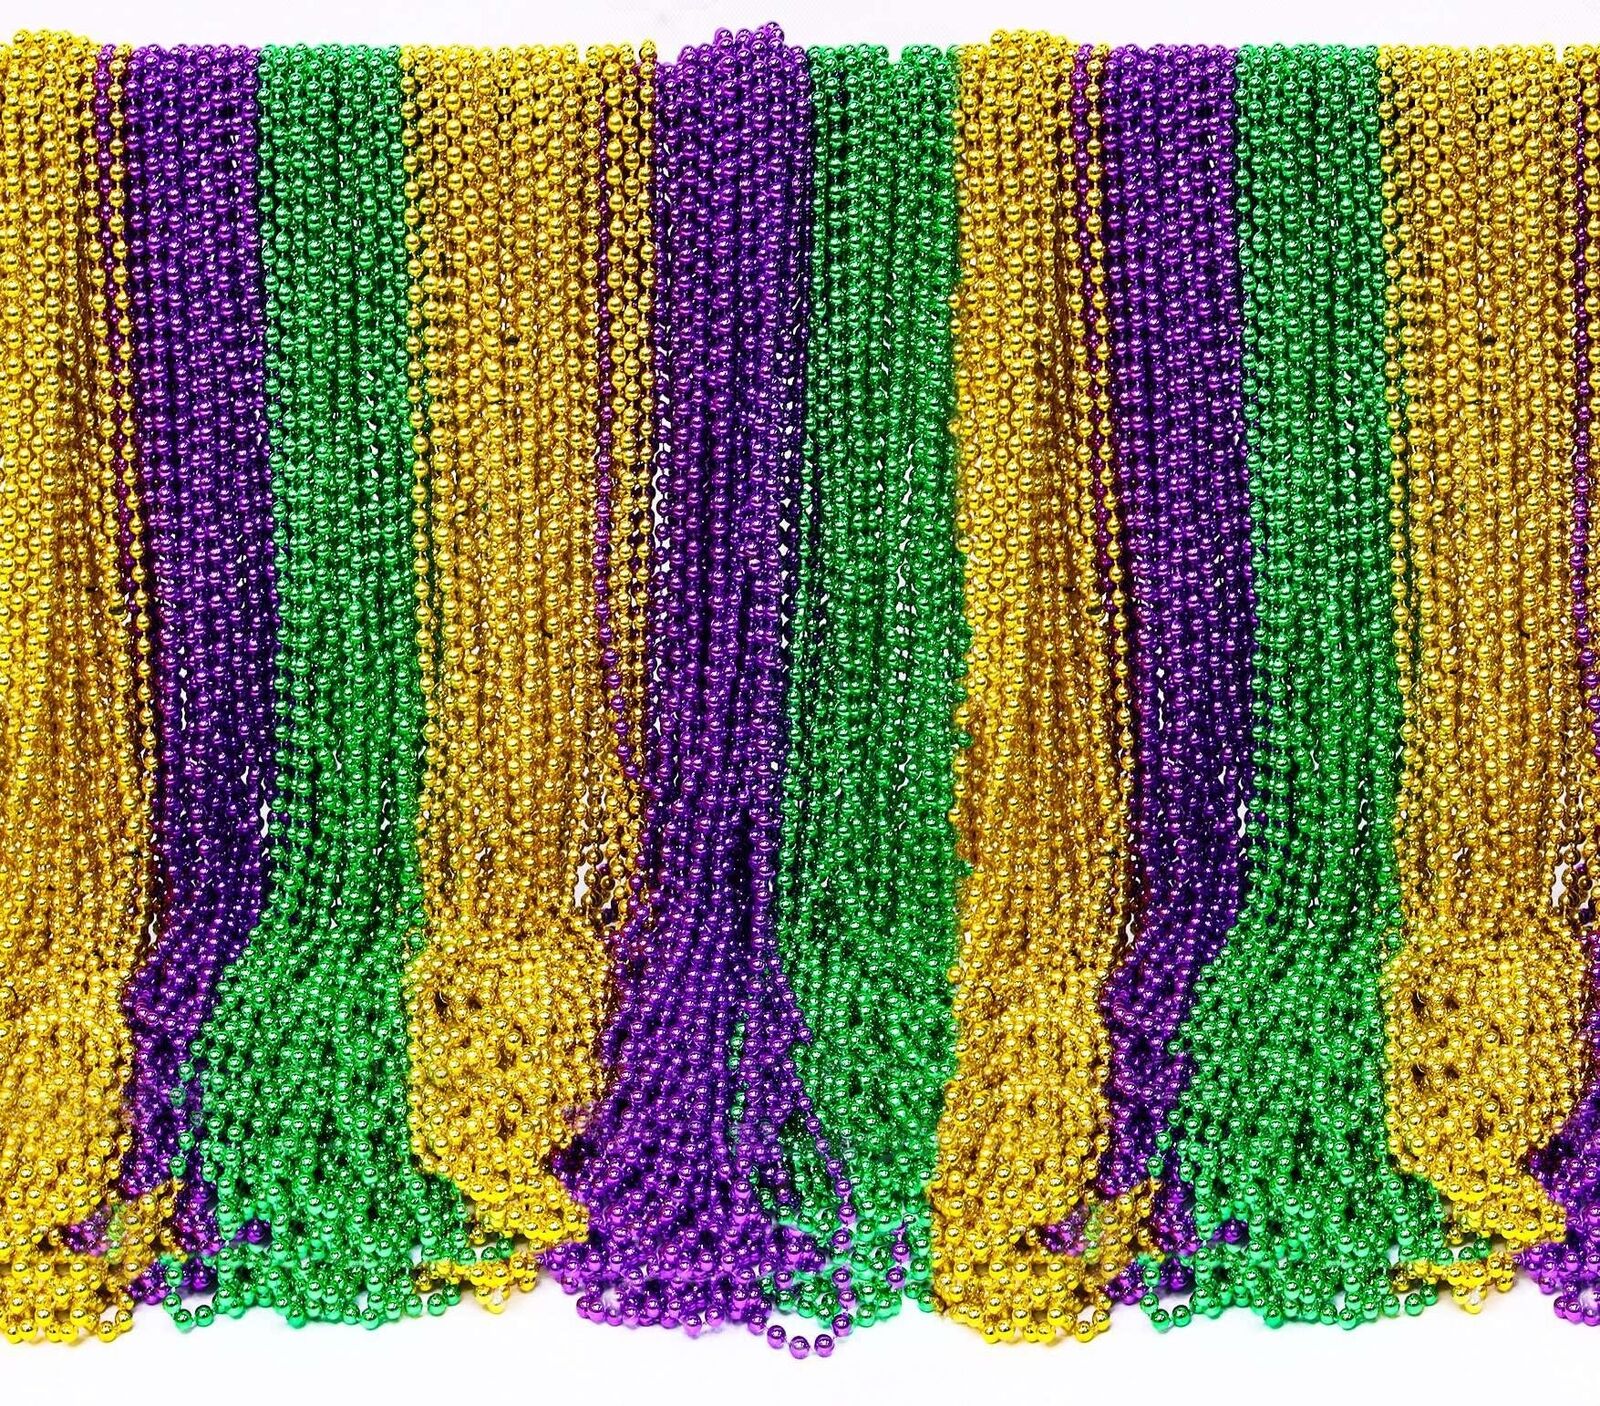 Camlinbo 200 Pack Mardi Gras Beads Necklaces Bulk Purple Green Gold Beads Mar...